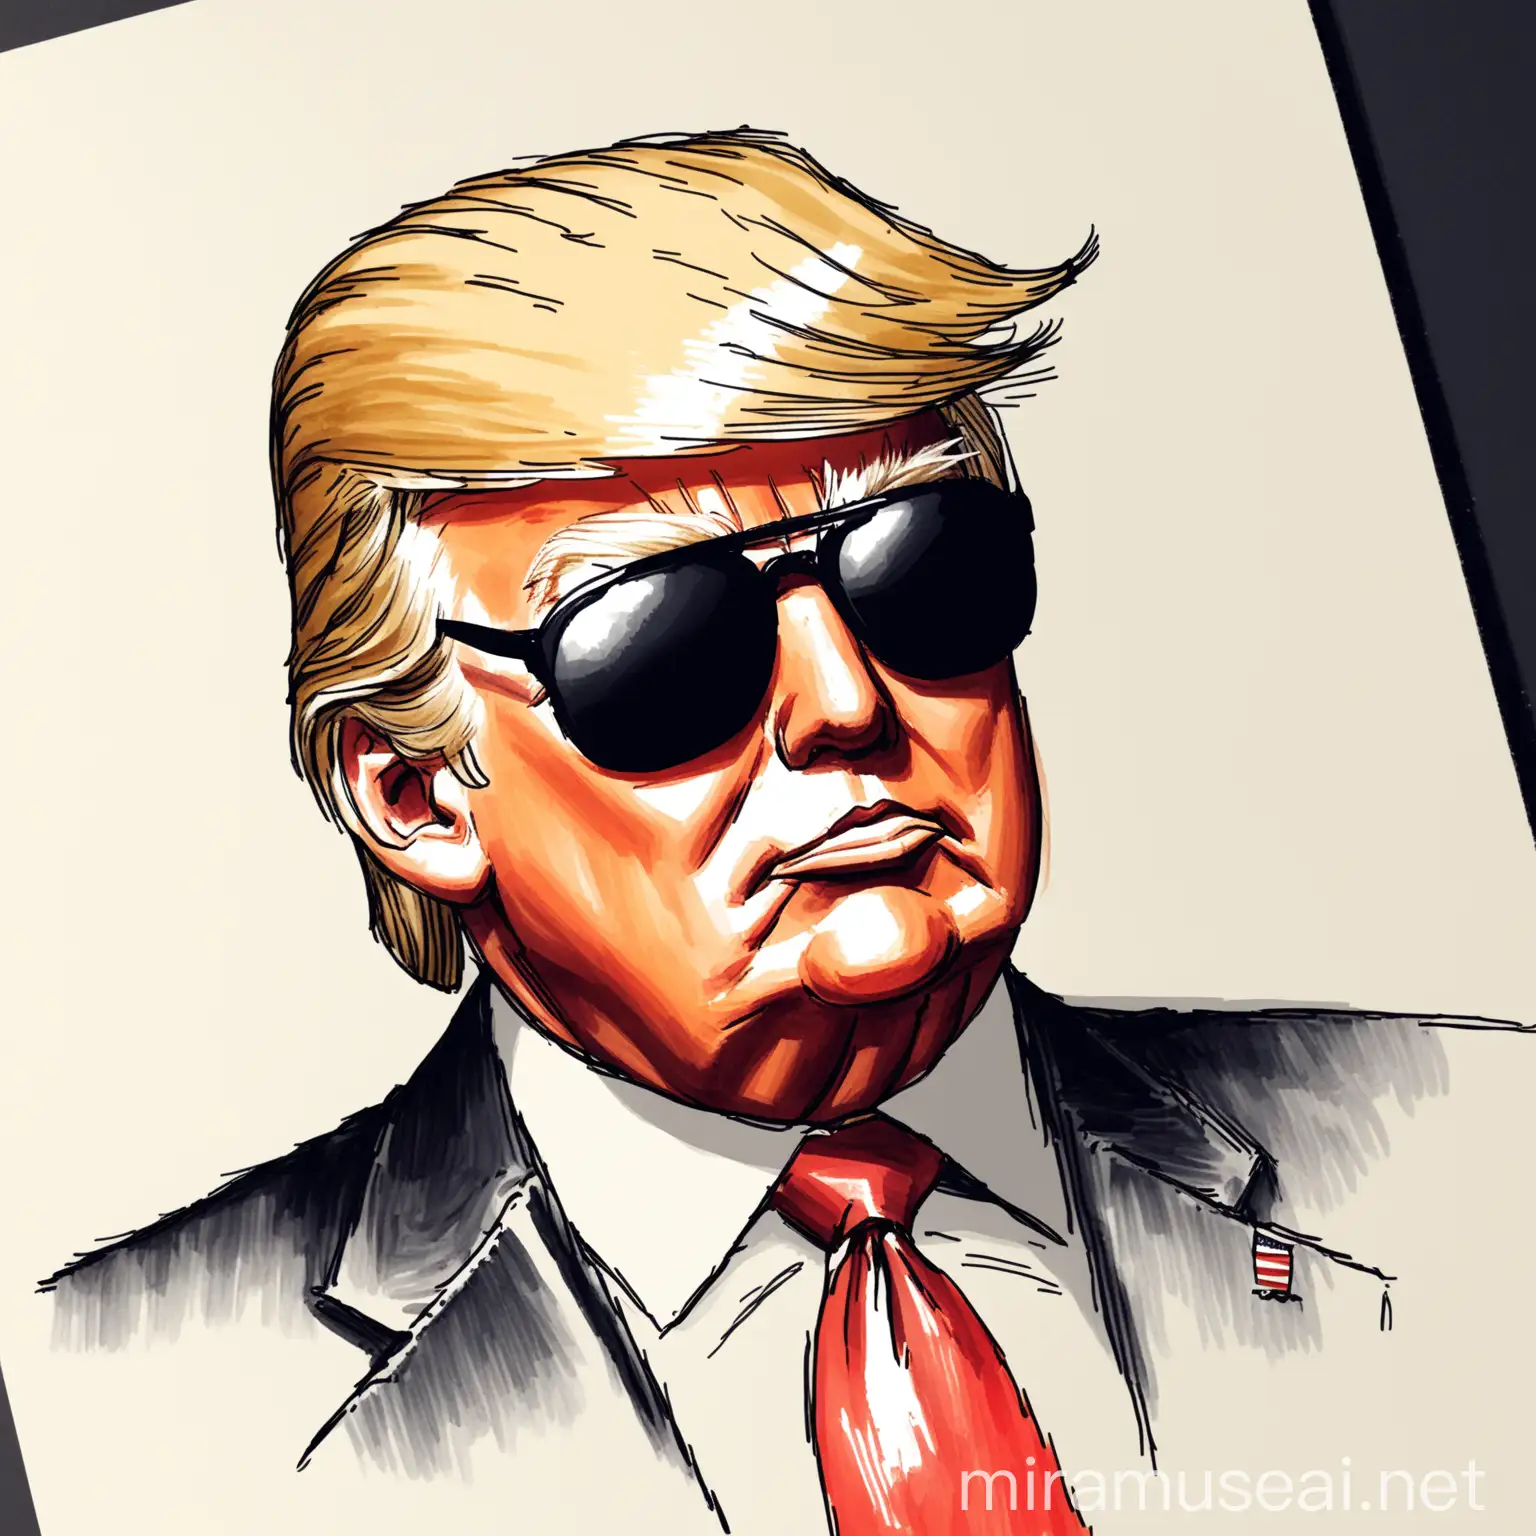  hand-drawn illustration of Donald Trump wears sunglasses 
